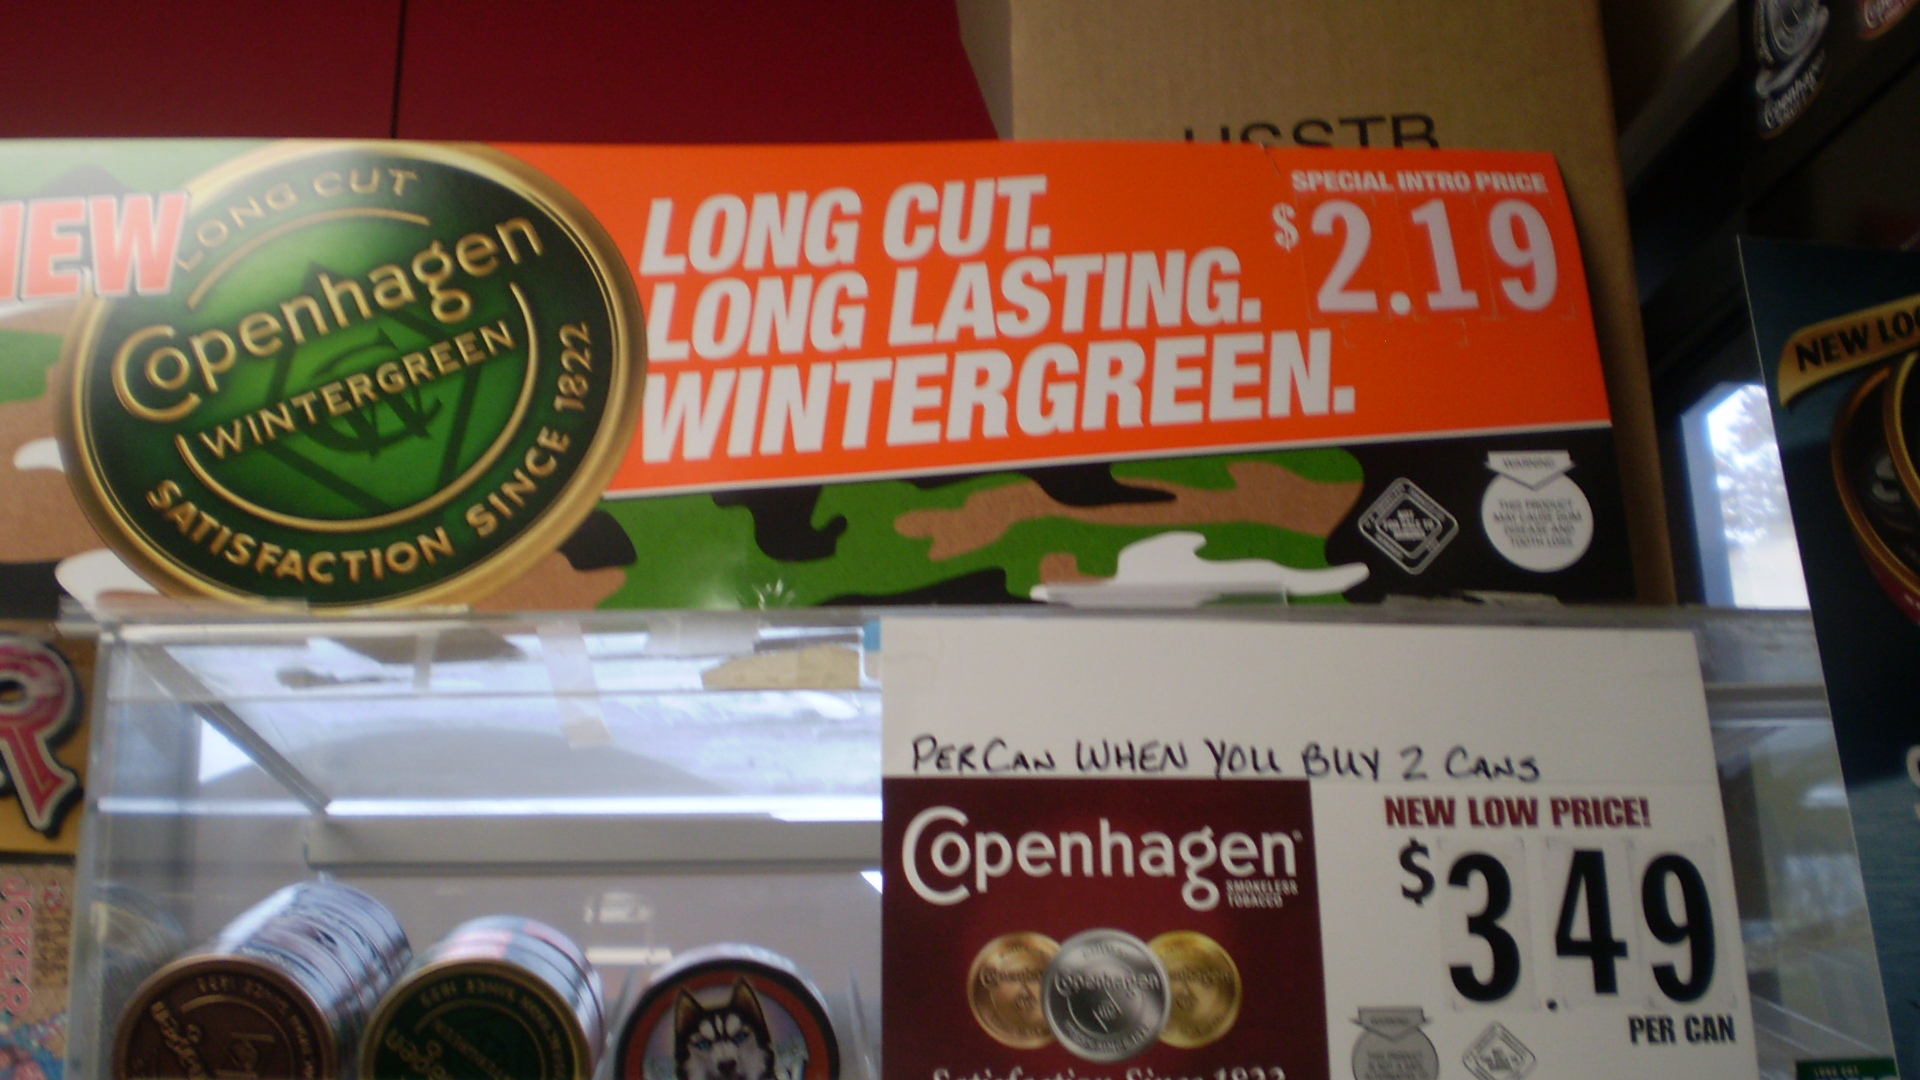 Store Update   Copenhagen Long Cut Wintergreen another new Marlboro